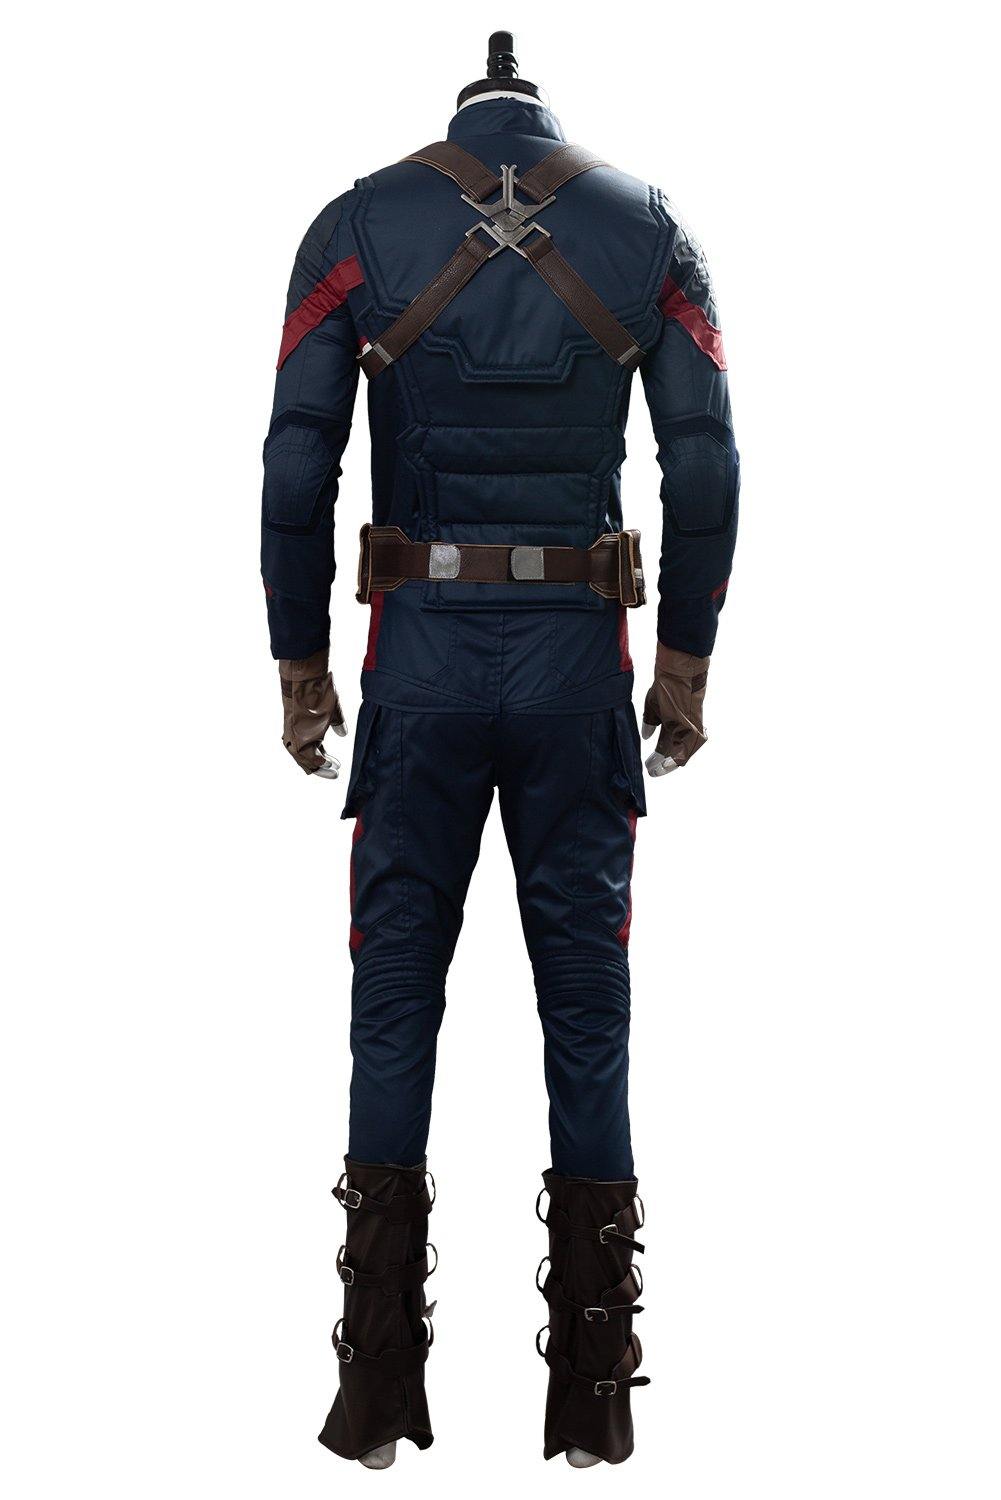 Avengers 4 Avengers: Endgame Captain America Cosplay Kostüm NEU Set - cosplaycartde